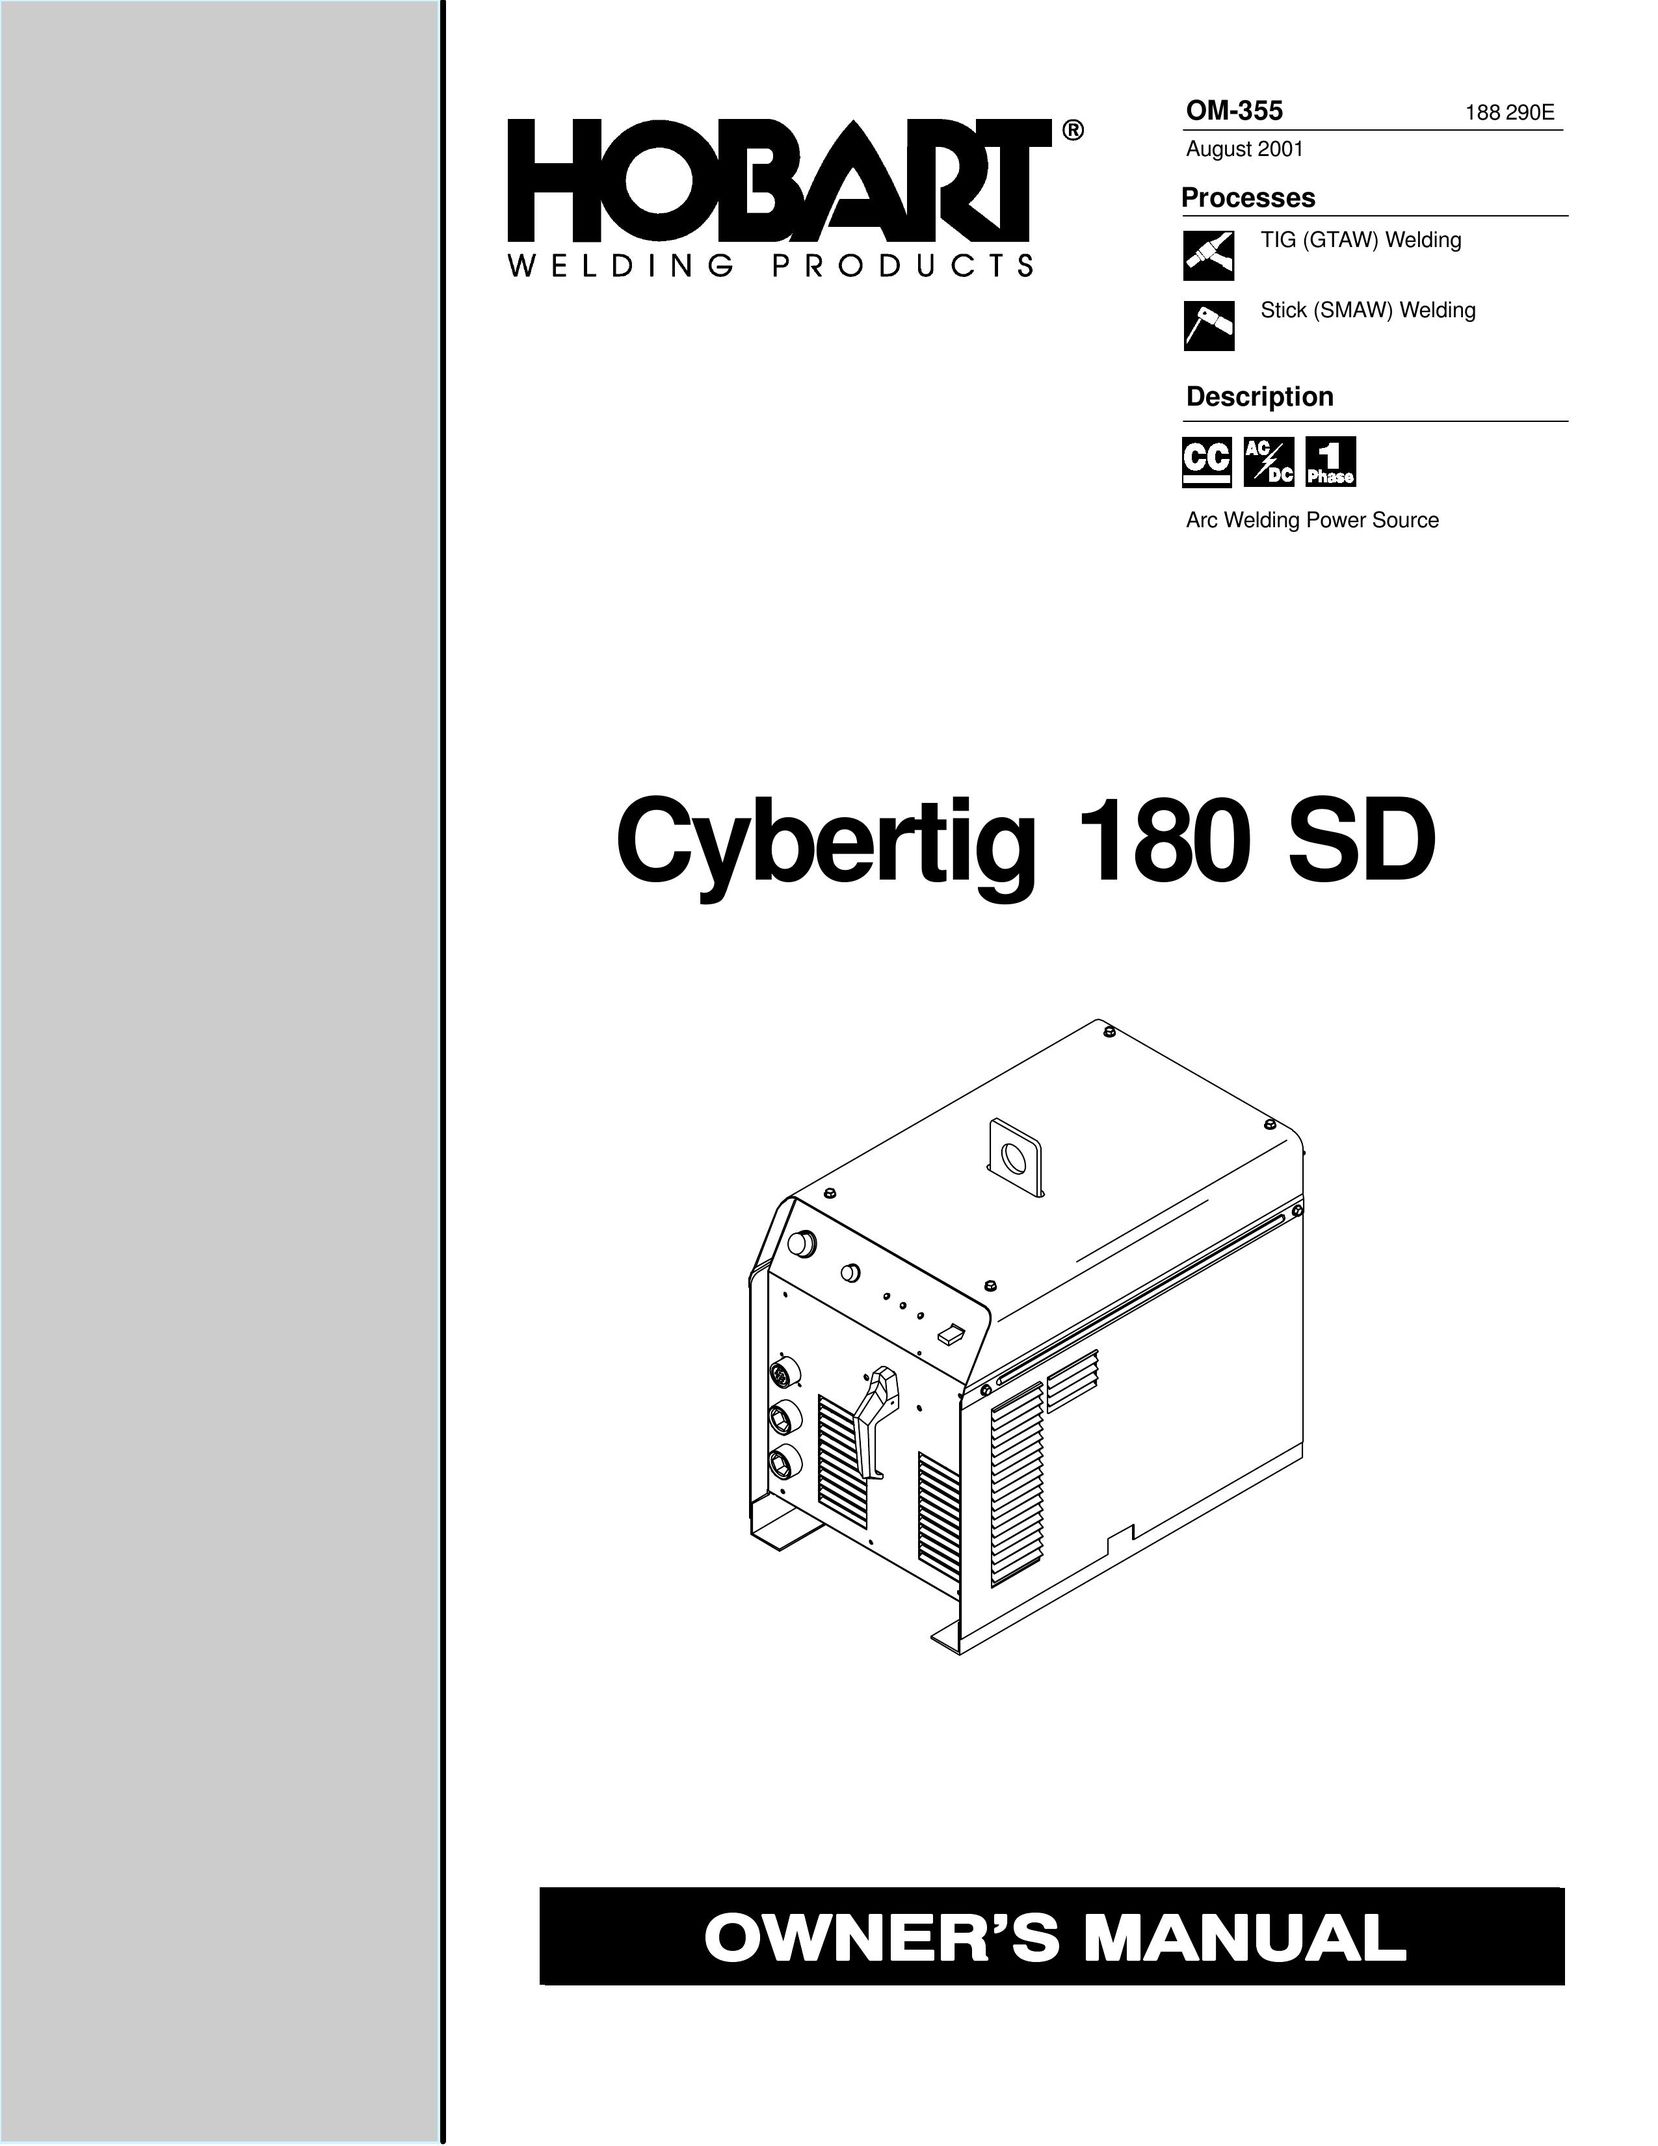 Hobart 180 SD Welding System User Manual